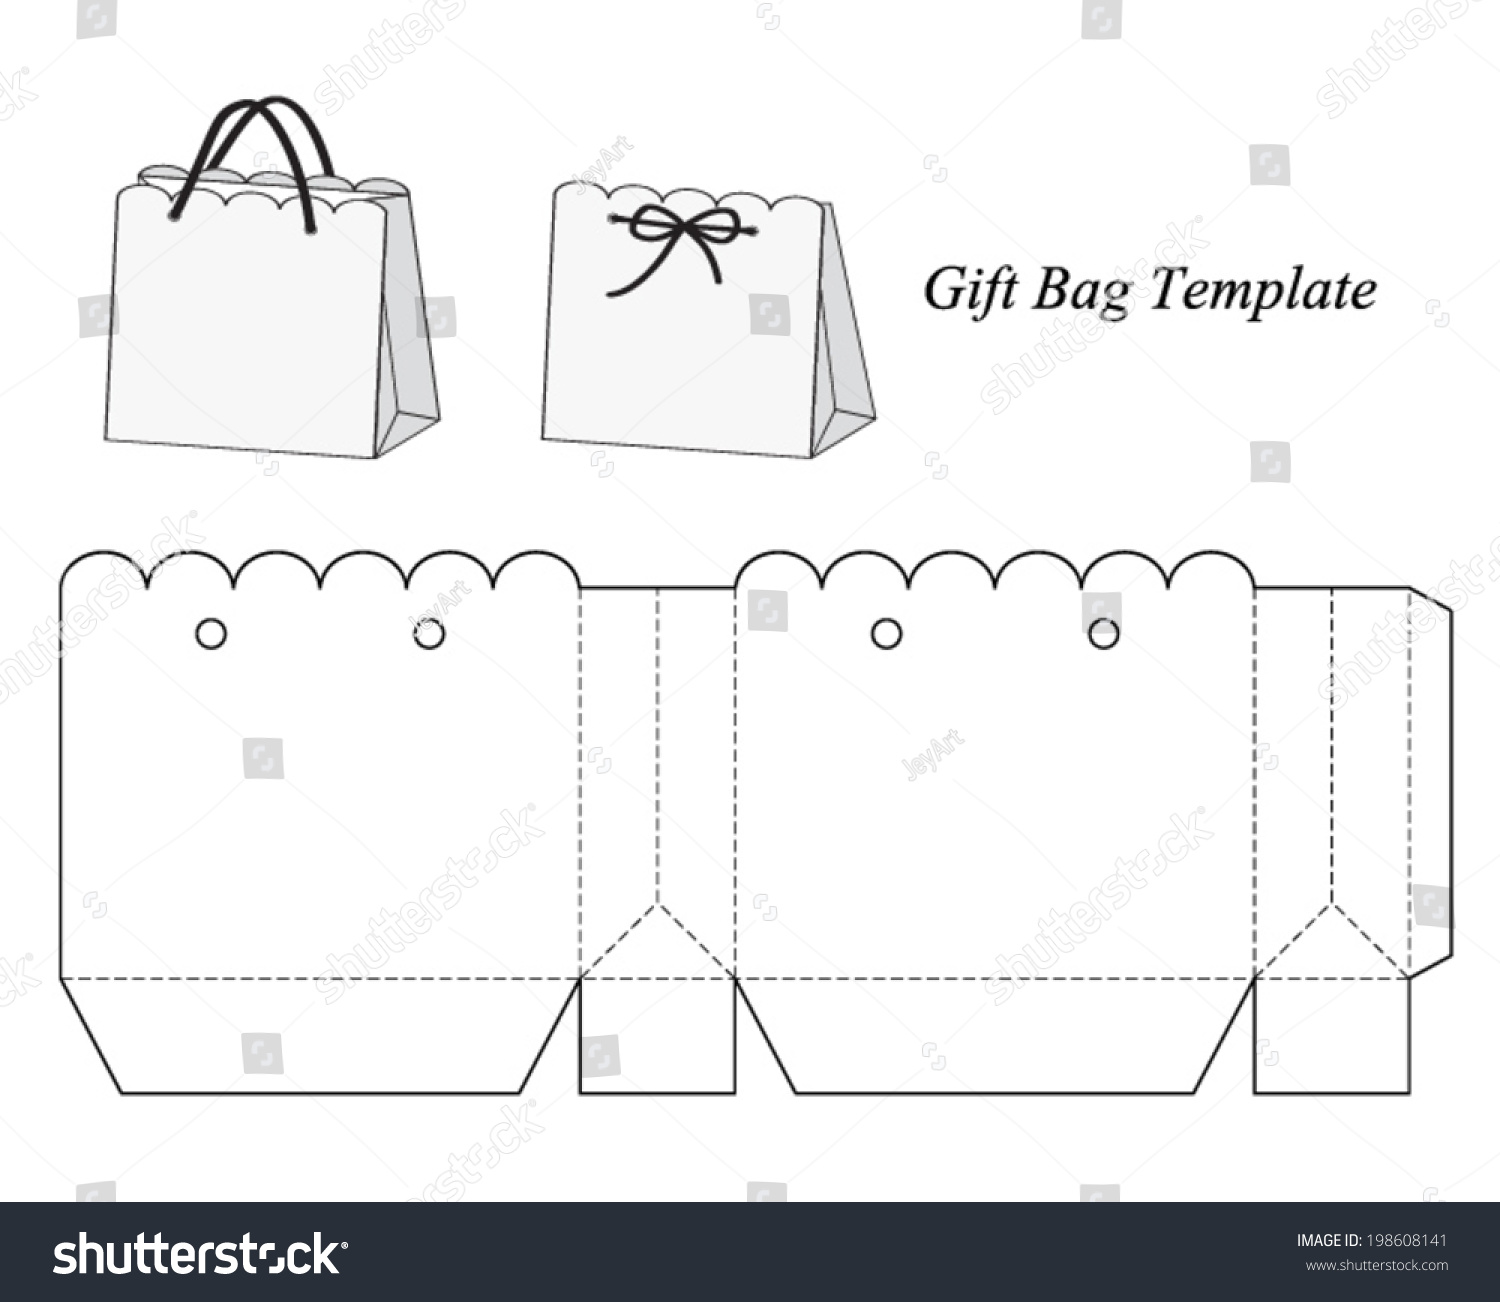 Interesting Gift Bag Template Vector Illustration Stock Vector ...